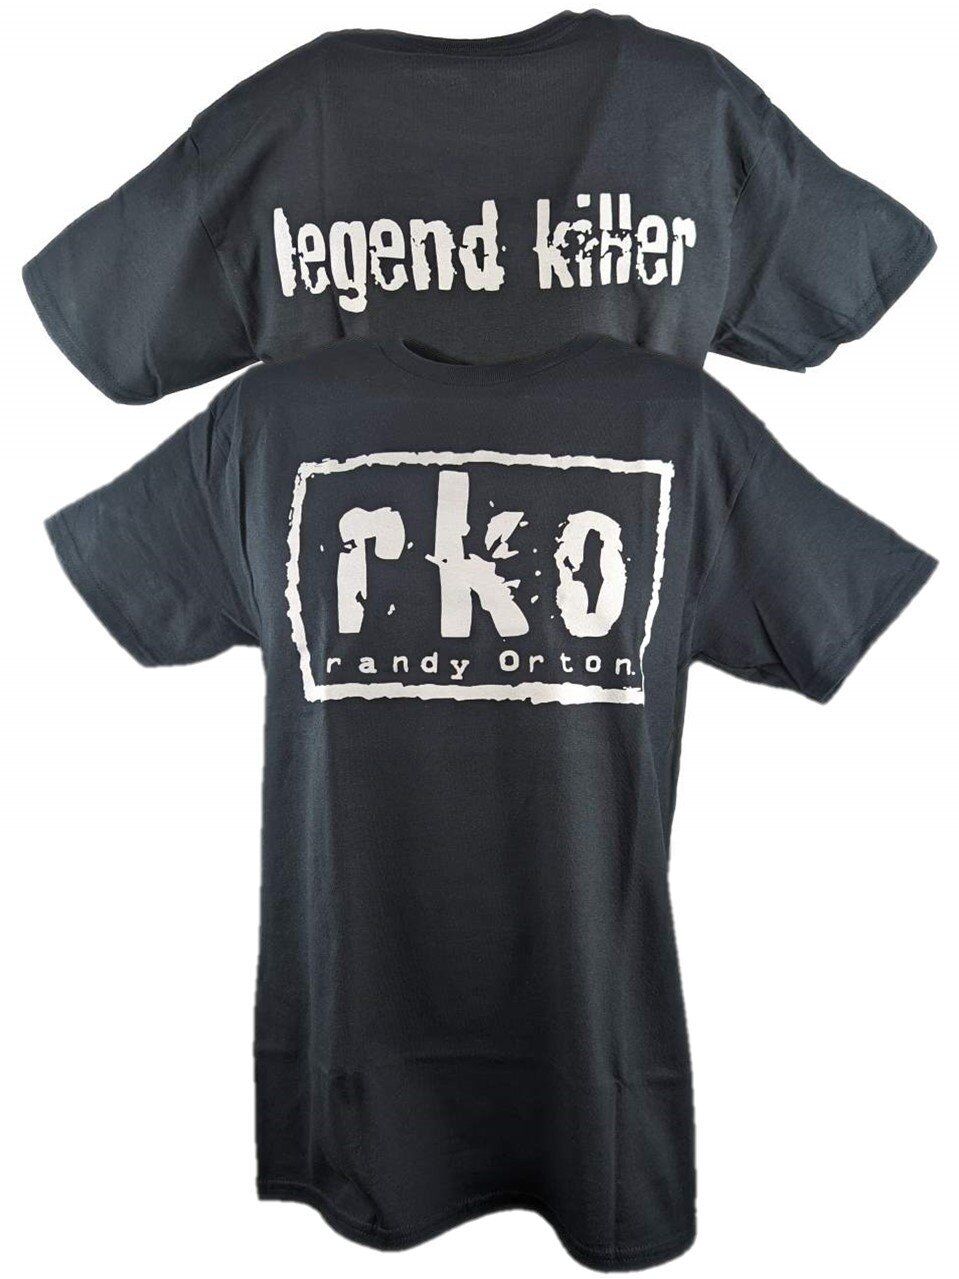 wrestlemania randy orton rko legend killer t shirt 5518 agvcw